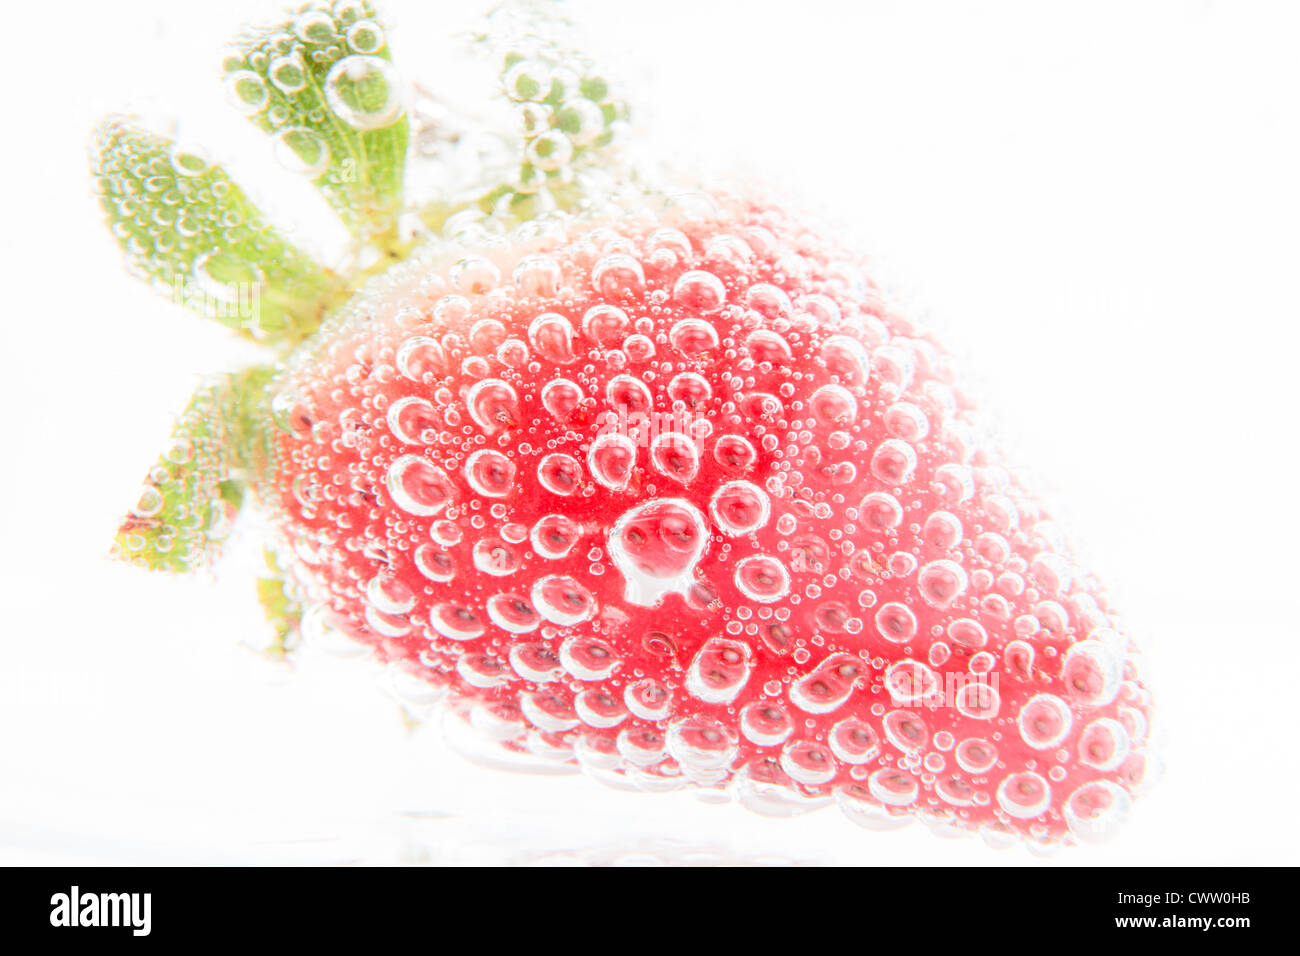 Erdbeere in Wasser mit Kohlensäure Stockfoto